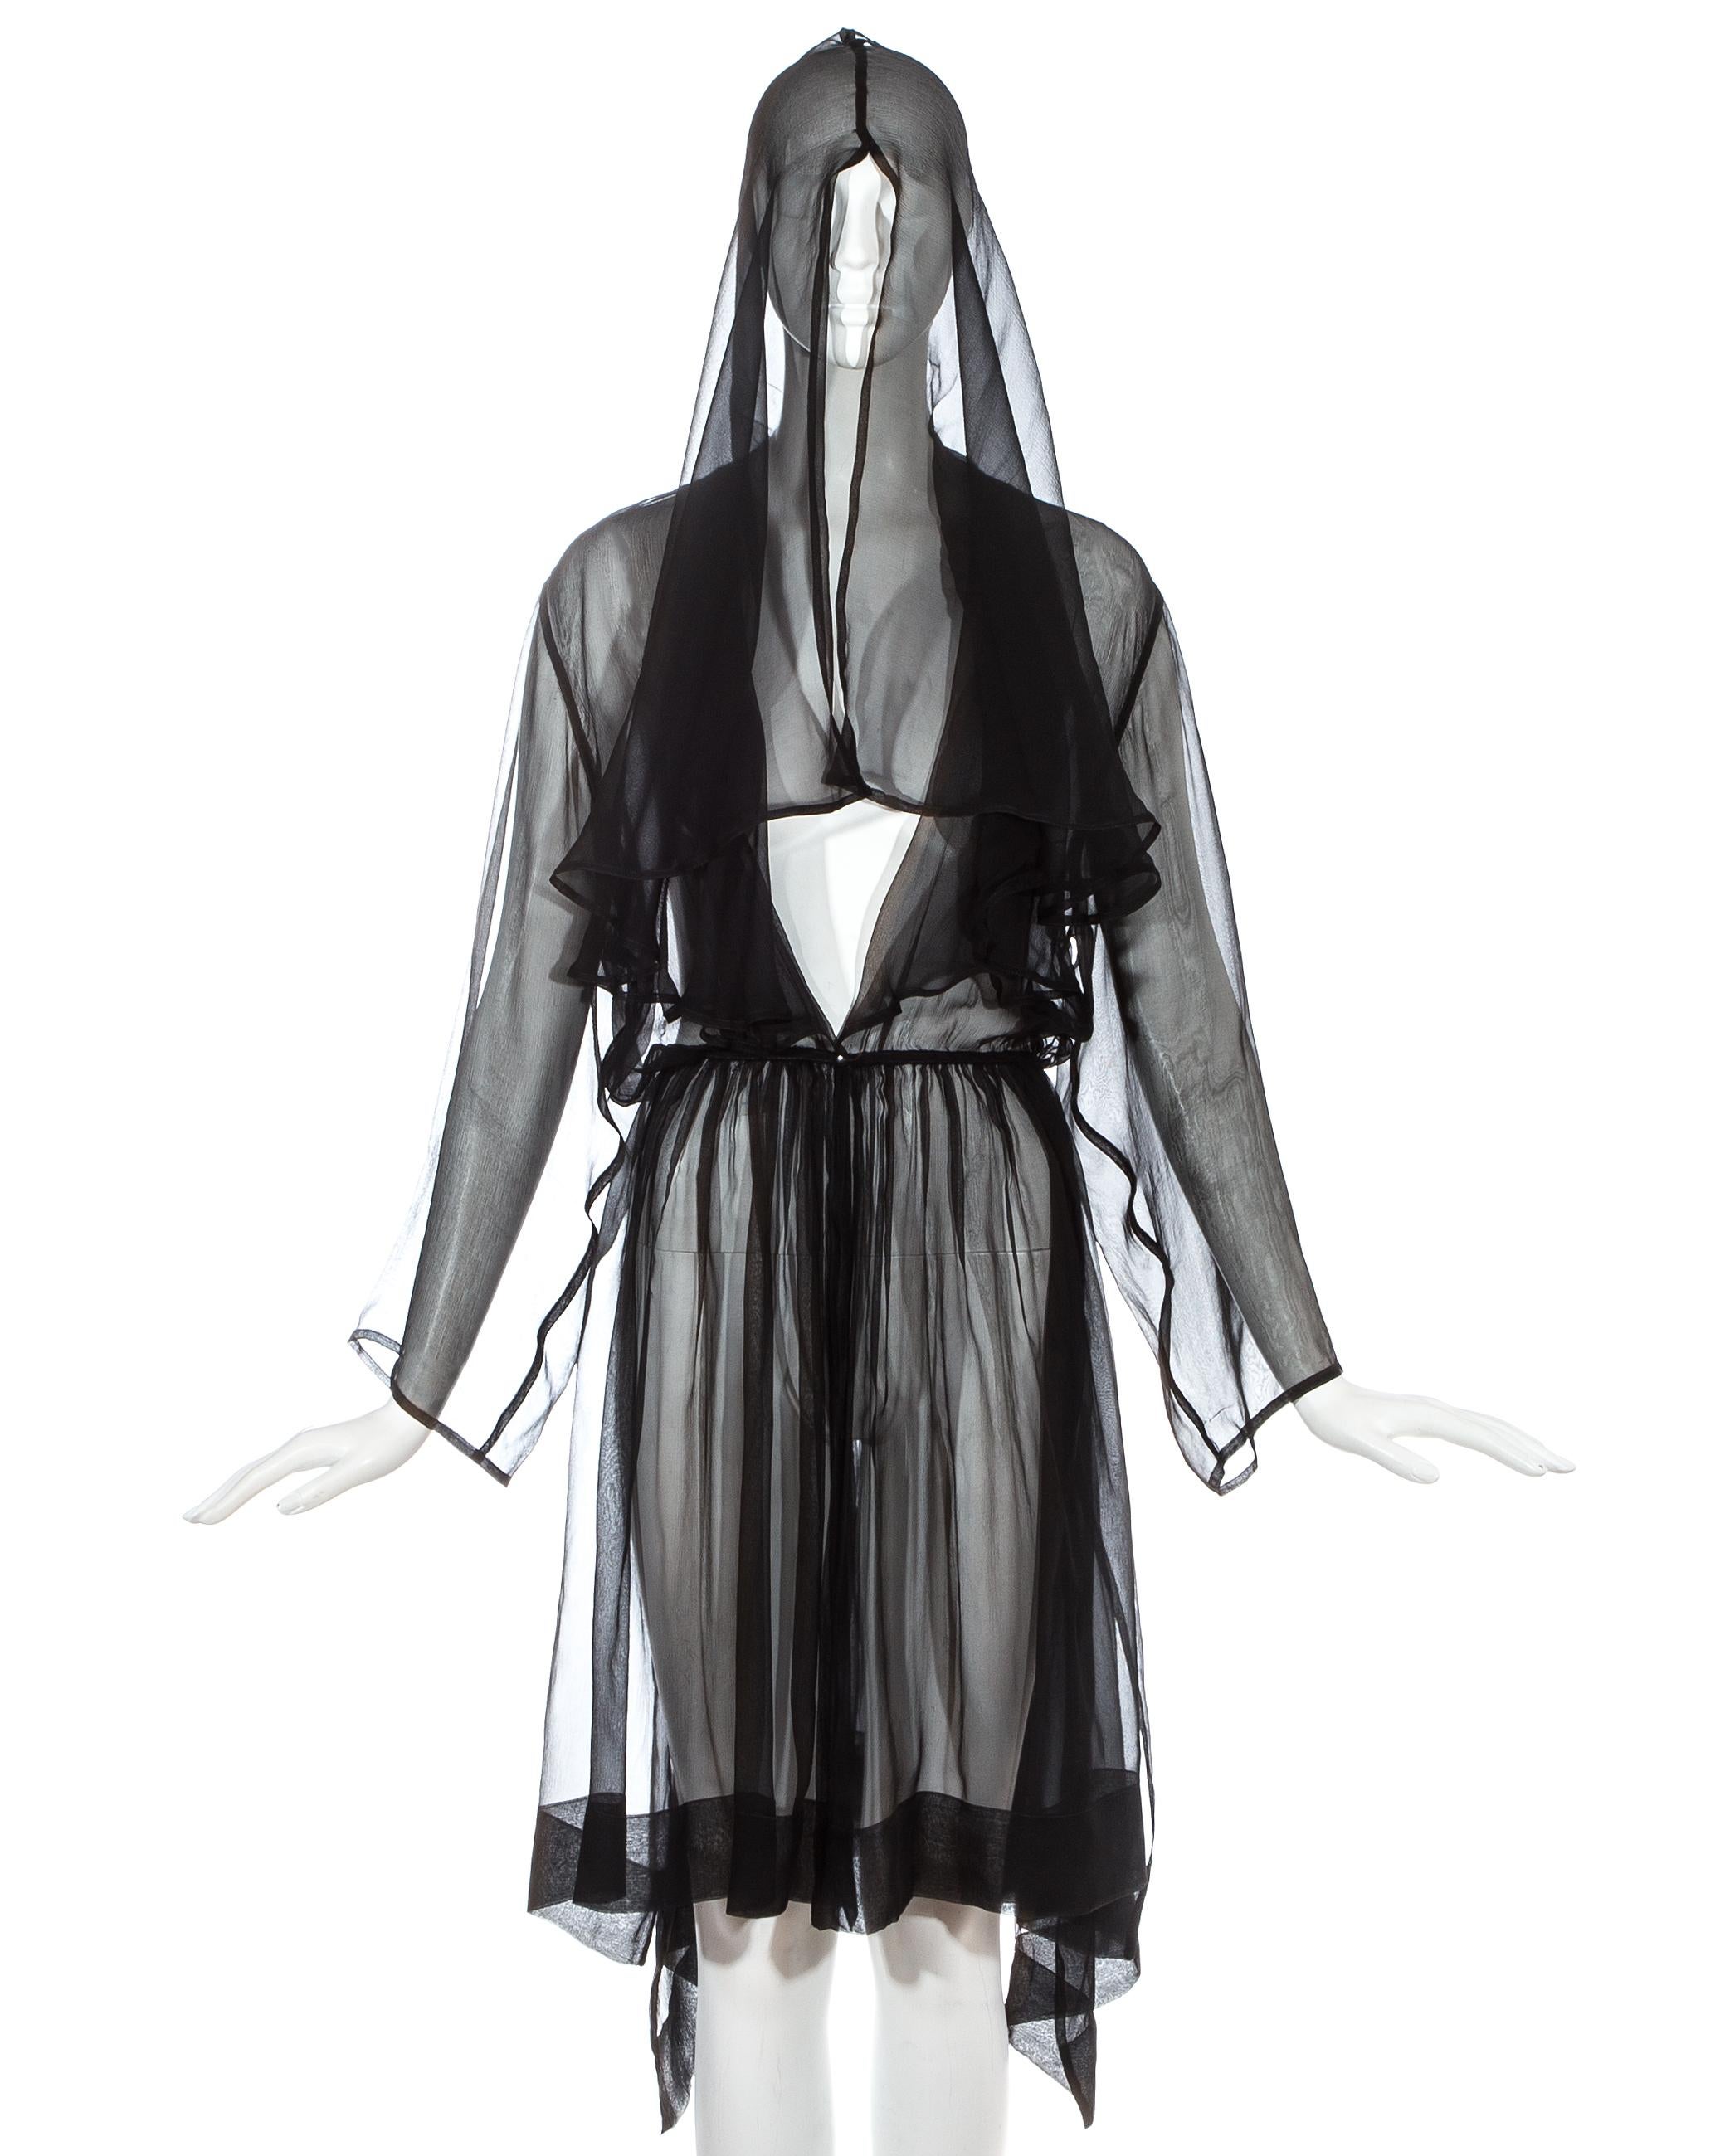 Azzedine Alaia black silk chiffon hooded evening cloak

Spring-Summer 1988